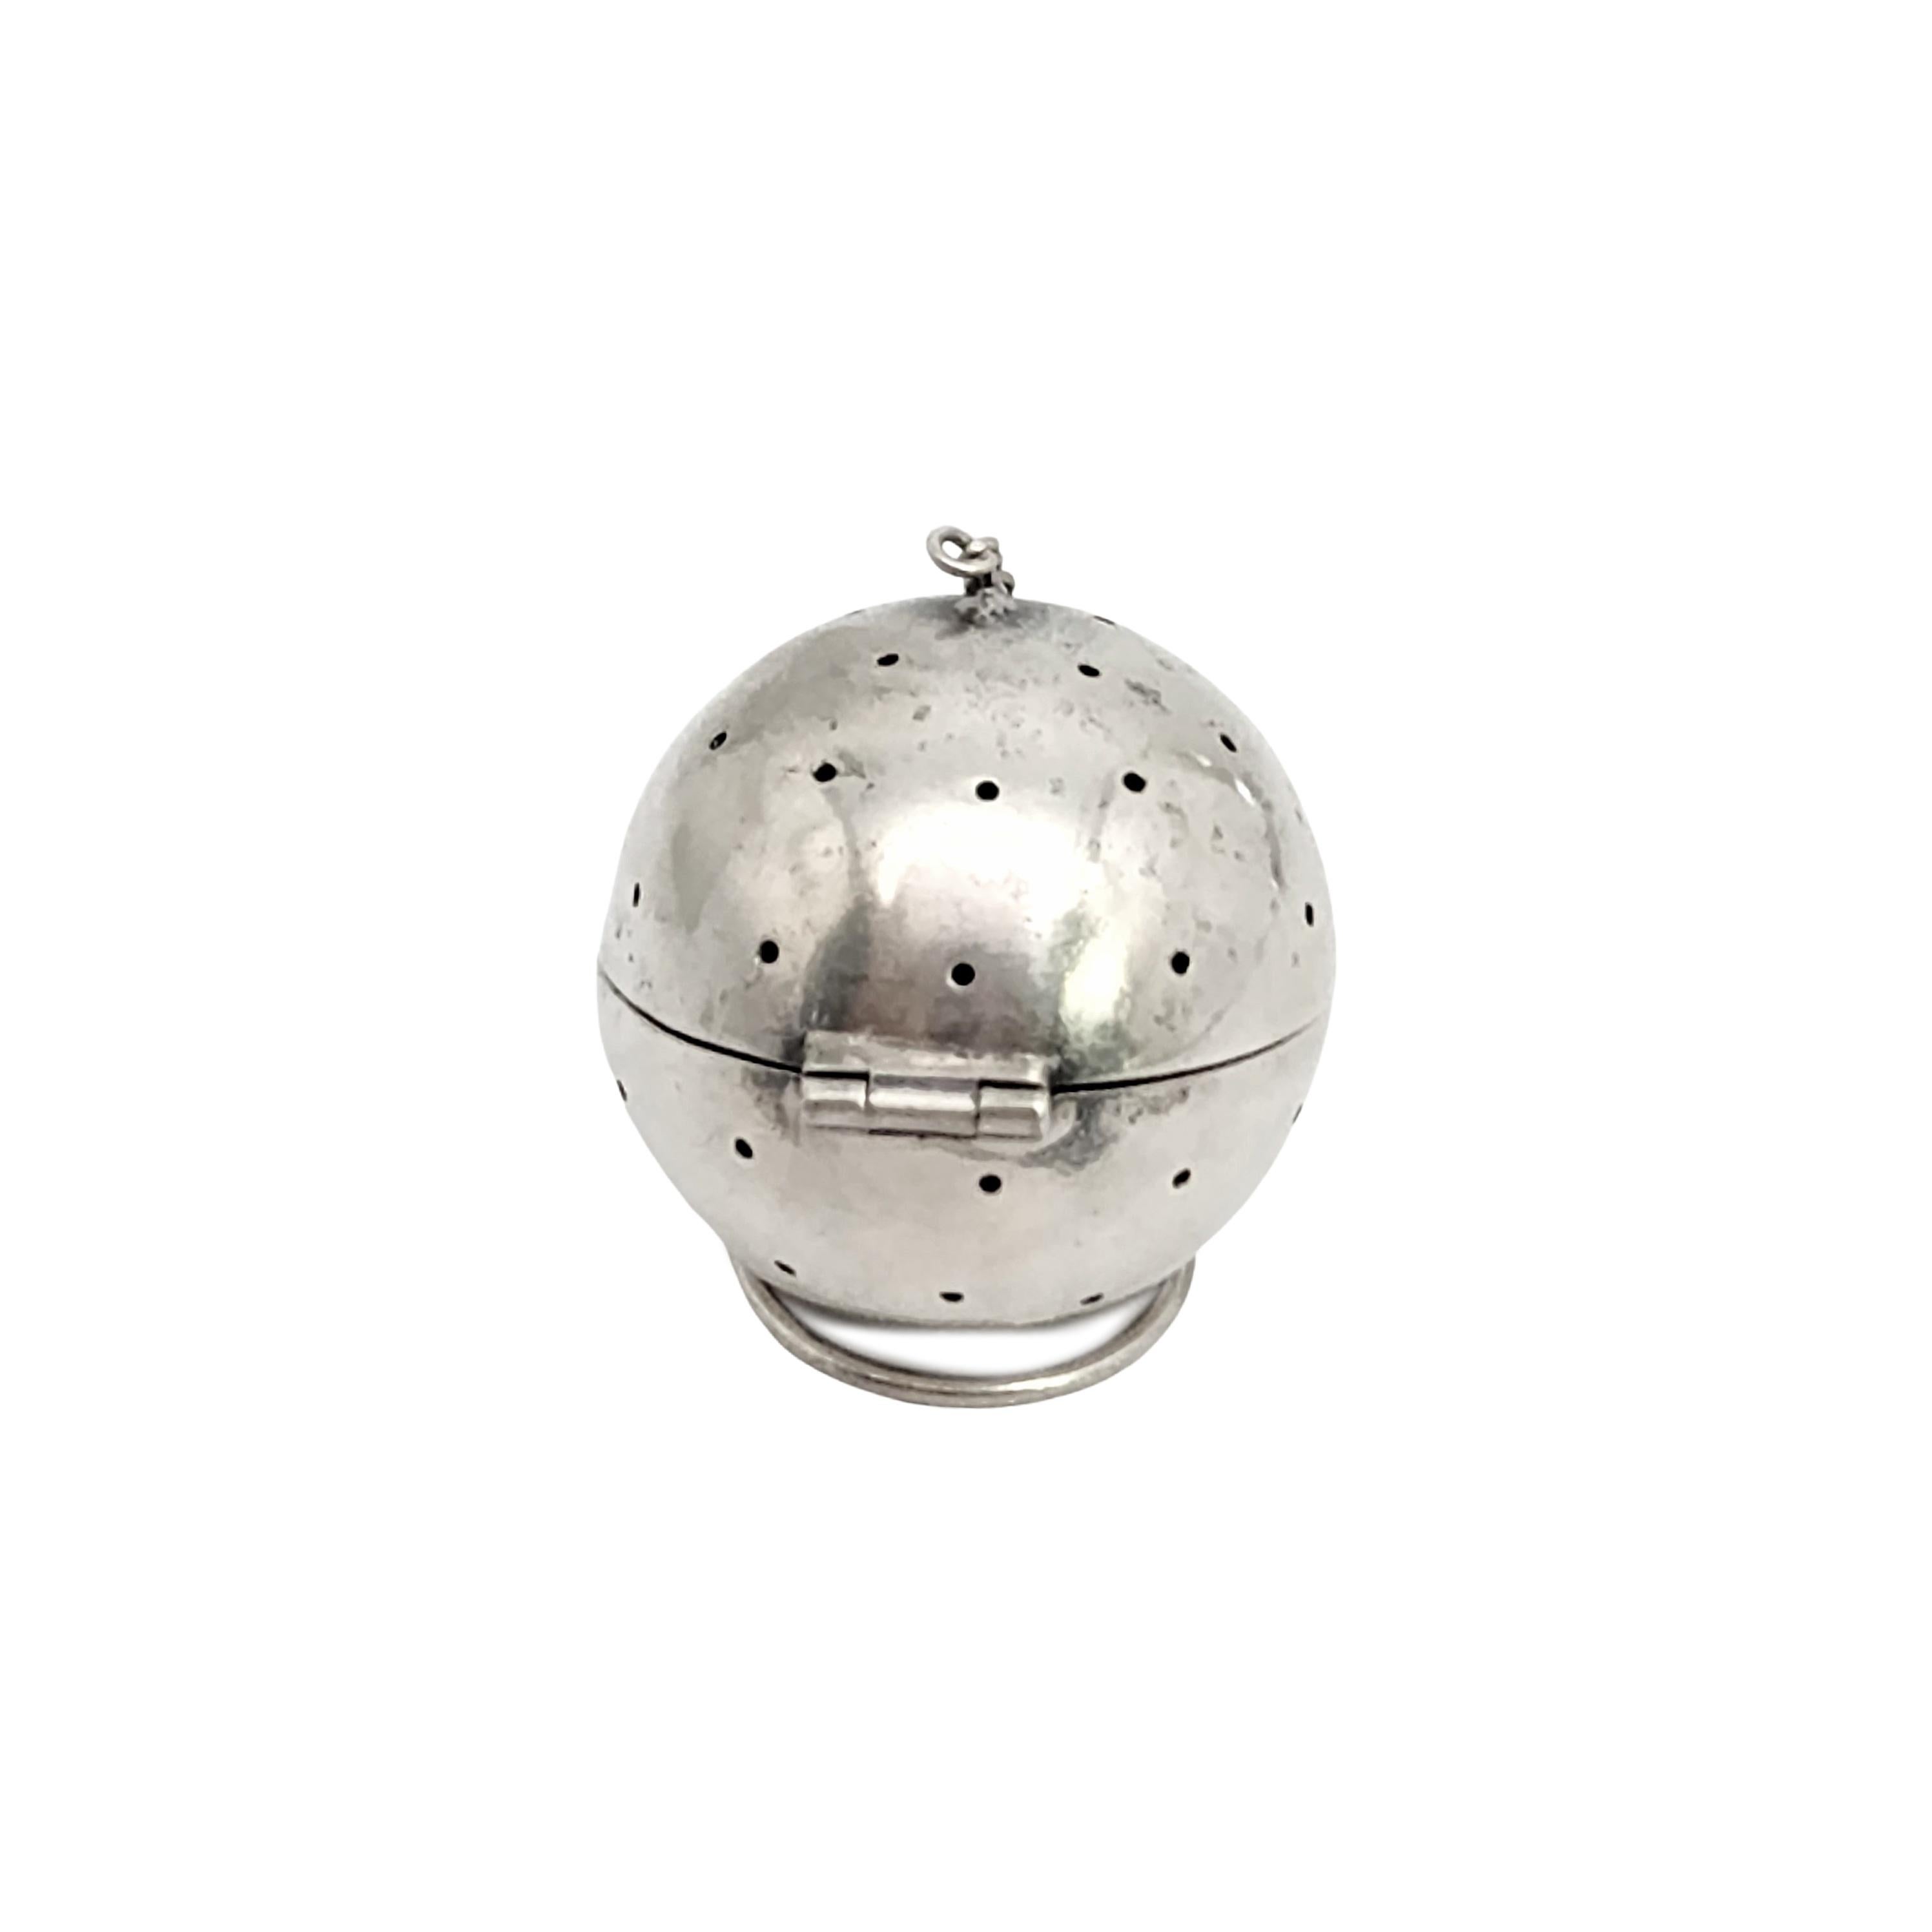 Rogers Lunt & Bowen Sterling Silver Tea Ball Infuser 6